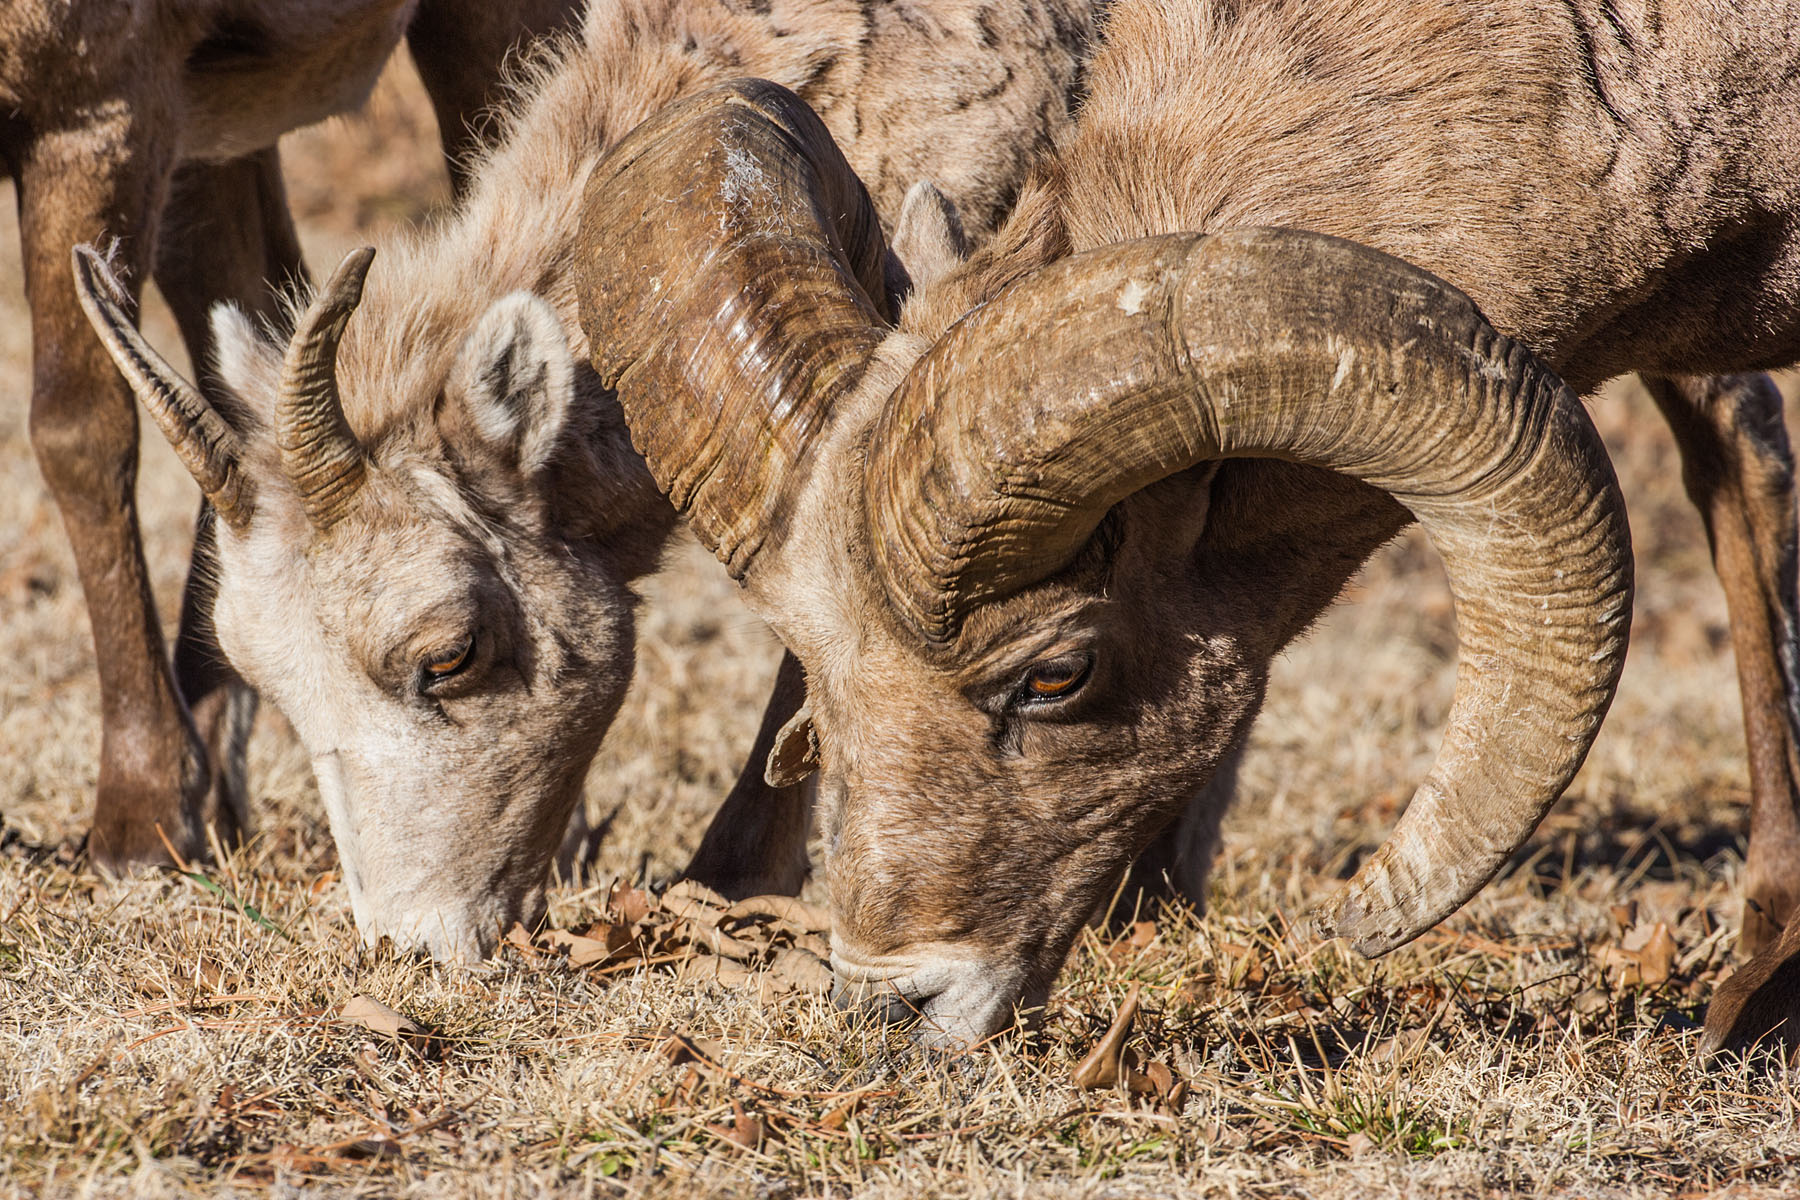 Rocky Mountain Bighorn ewe and ram, Custer State Park, South Dakota.  Click for next photo.